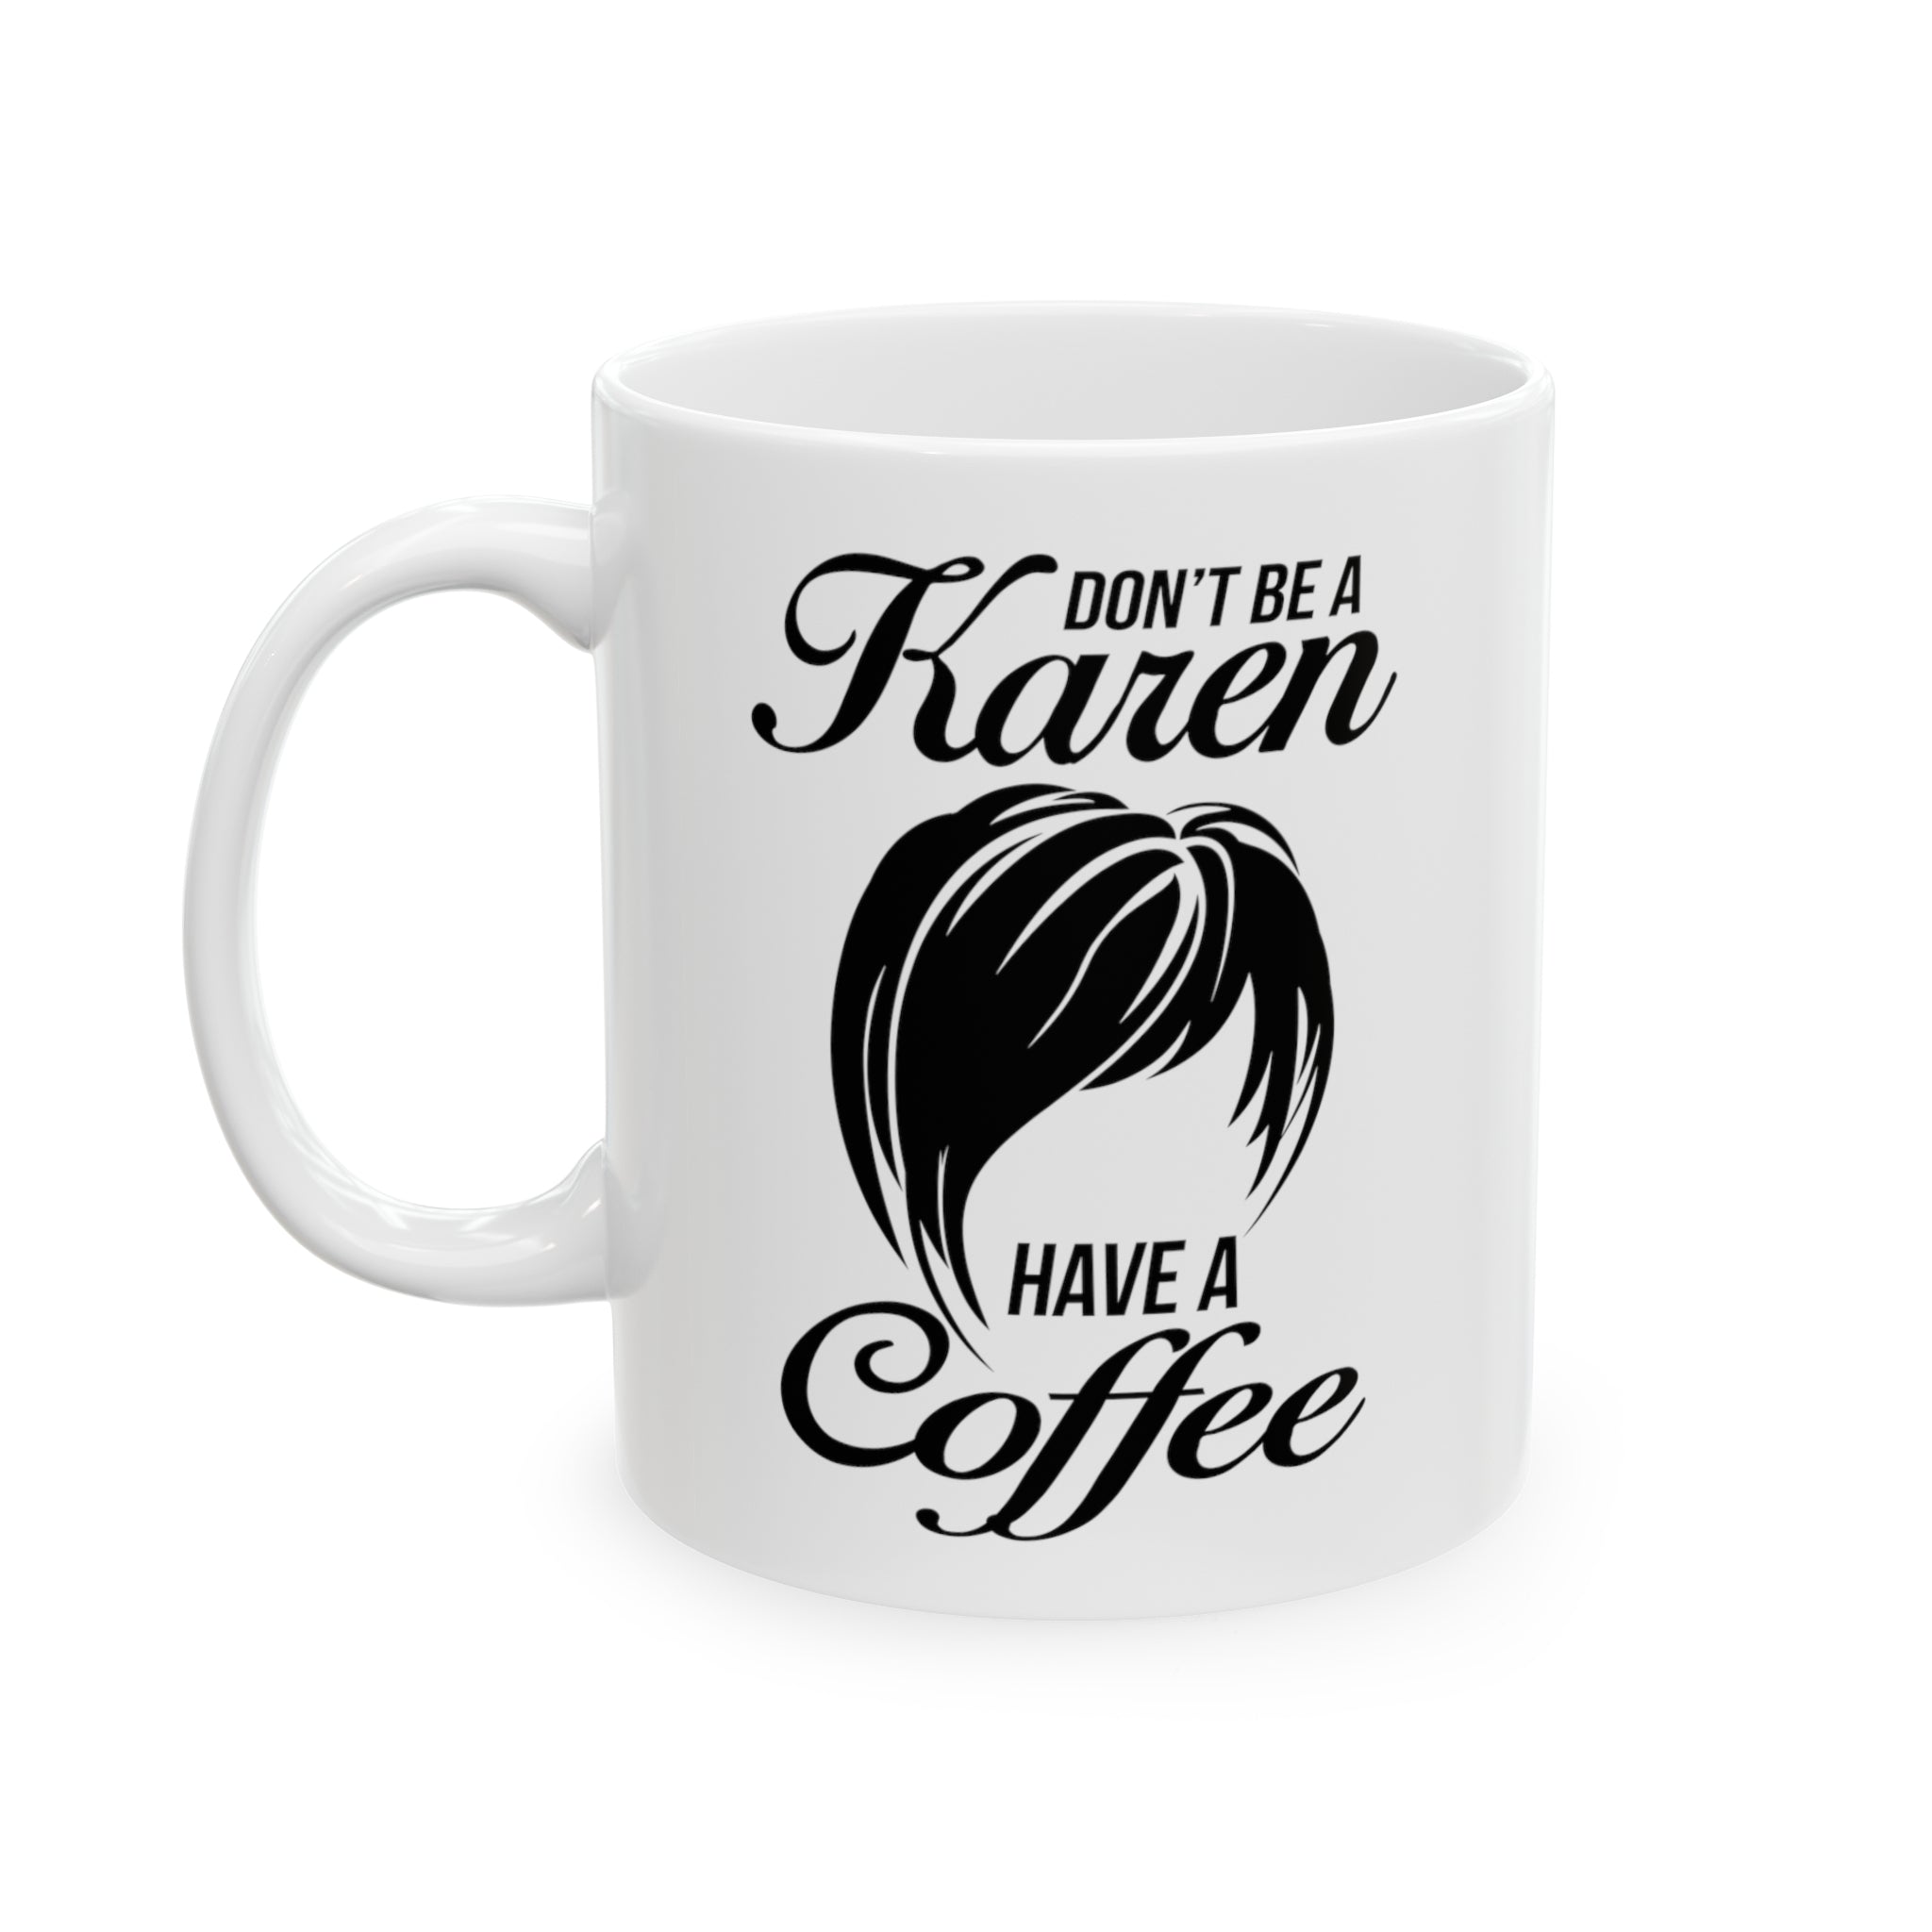 Don't be A Karen Mug [PERFECT for Grouchy Friends]